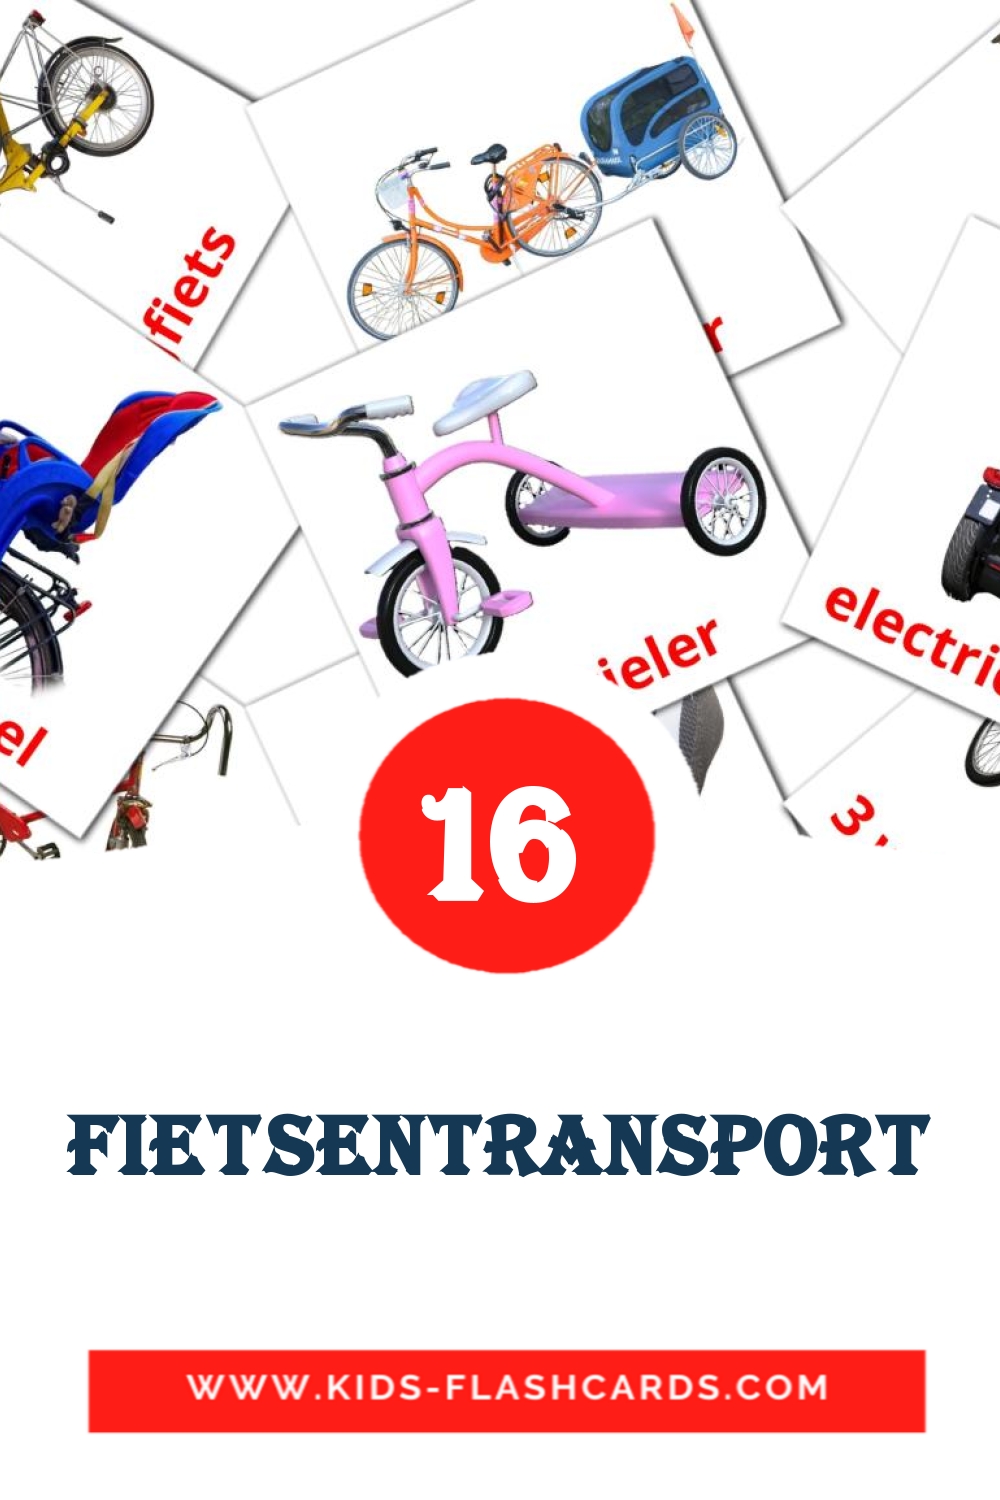 16 tarjetas didacticas de Fietsentransport para el jardín de infancia en holandés